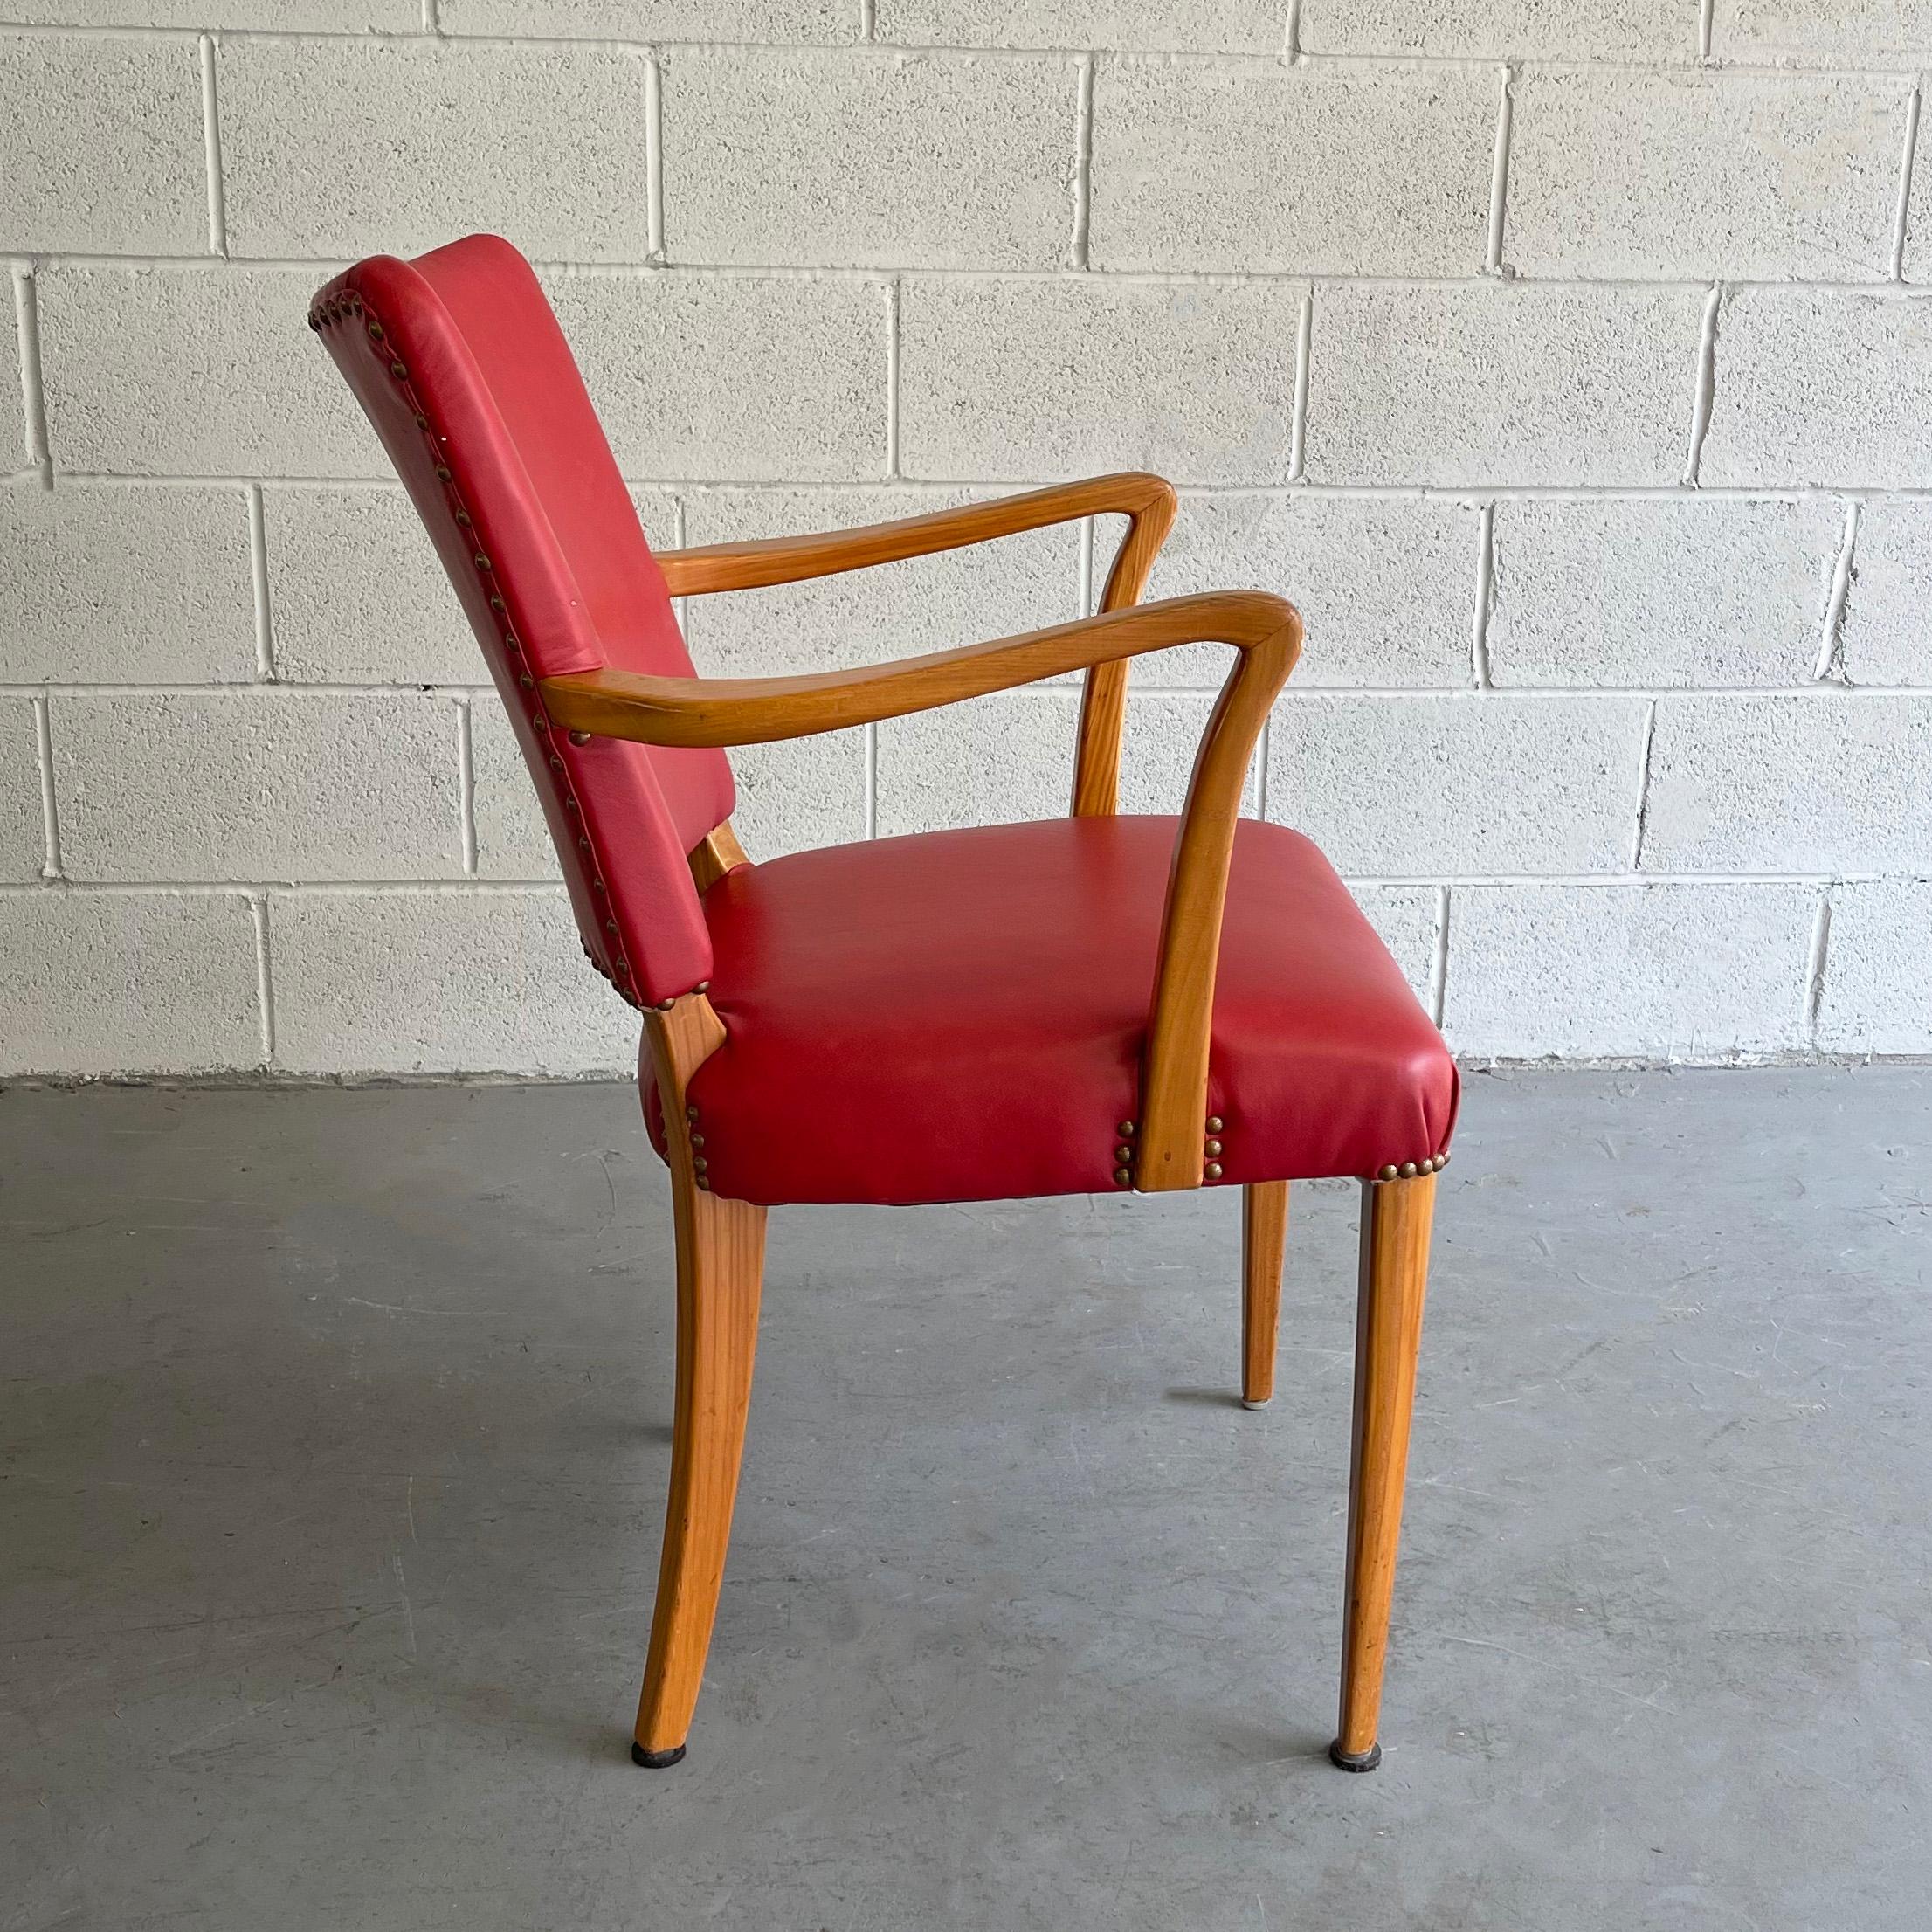 Midcentury, Biedermeier style armchair features an elegant cedar frame upholstered in red vinyl with nailhead detail.